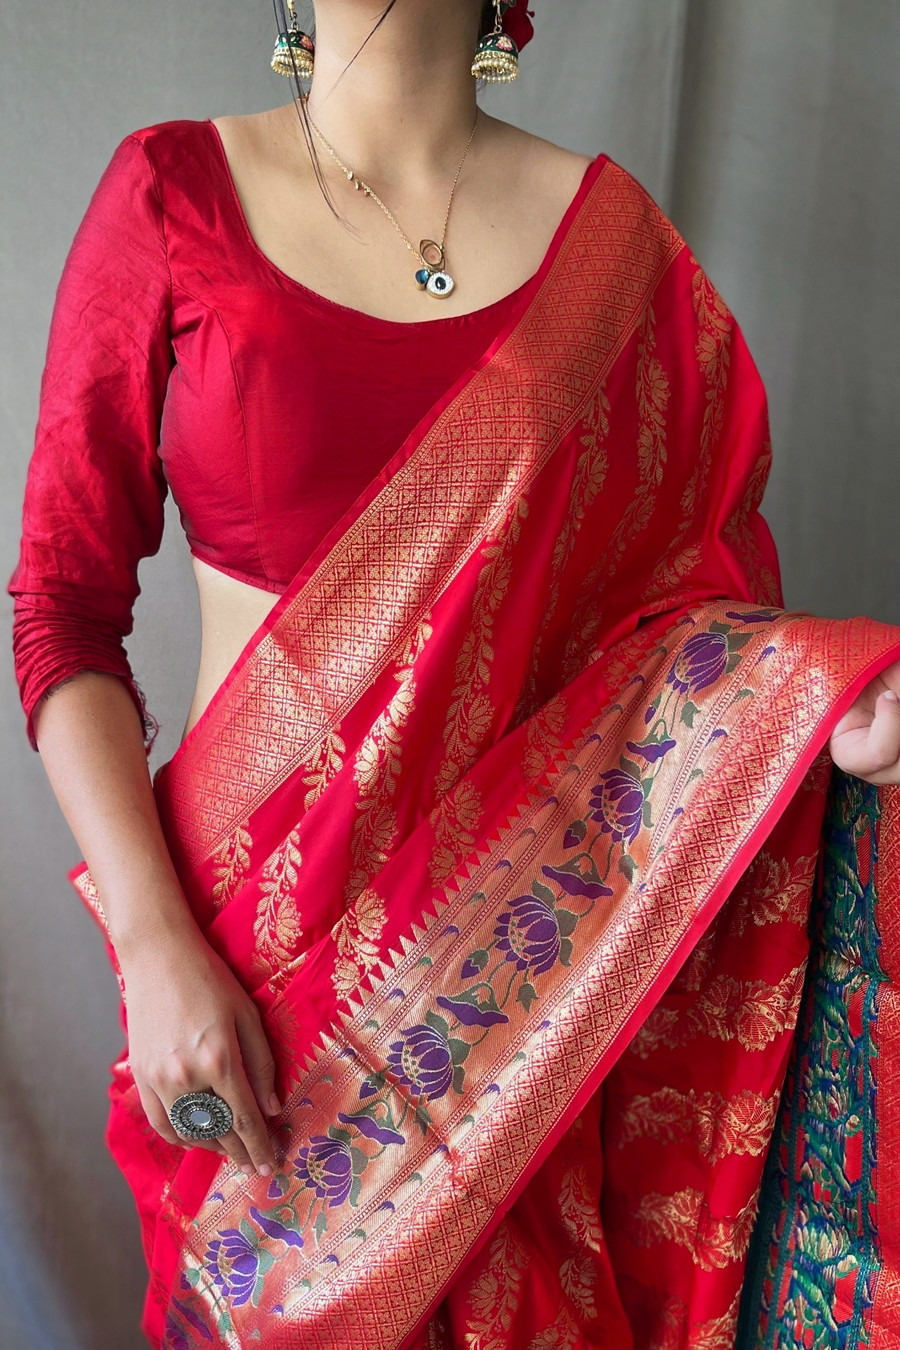 Gold zari Woven Banarasi silk saree with meenakari border - Red